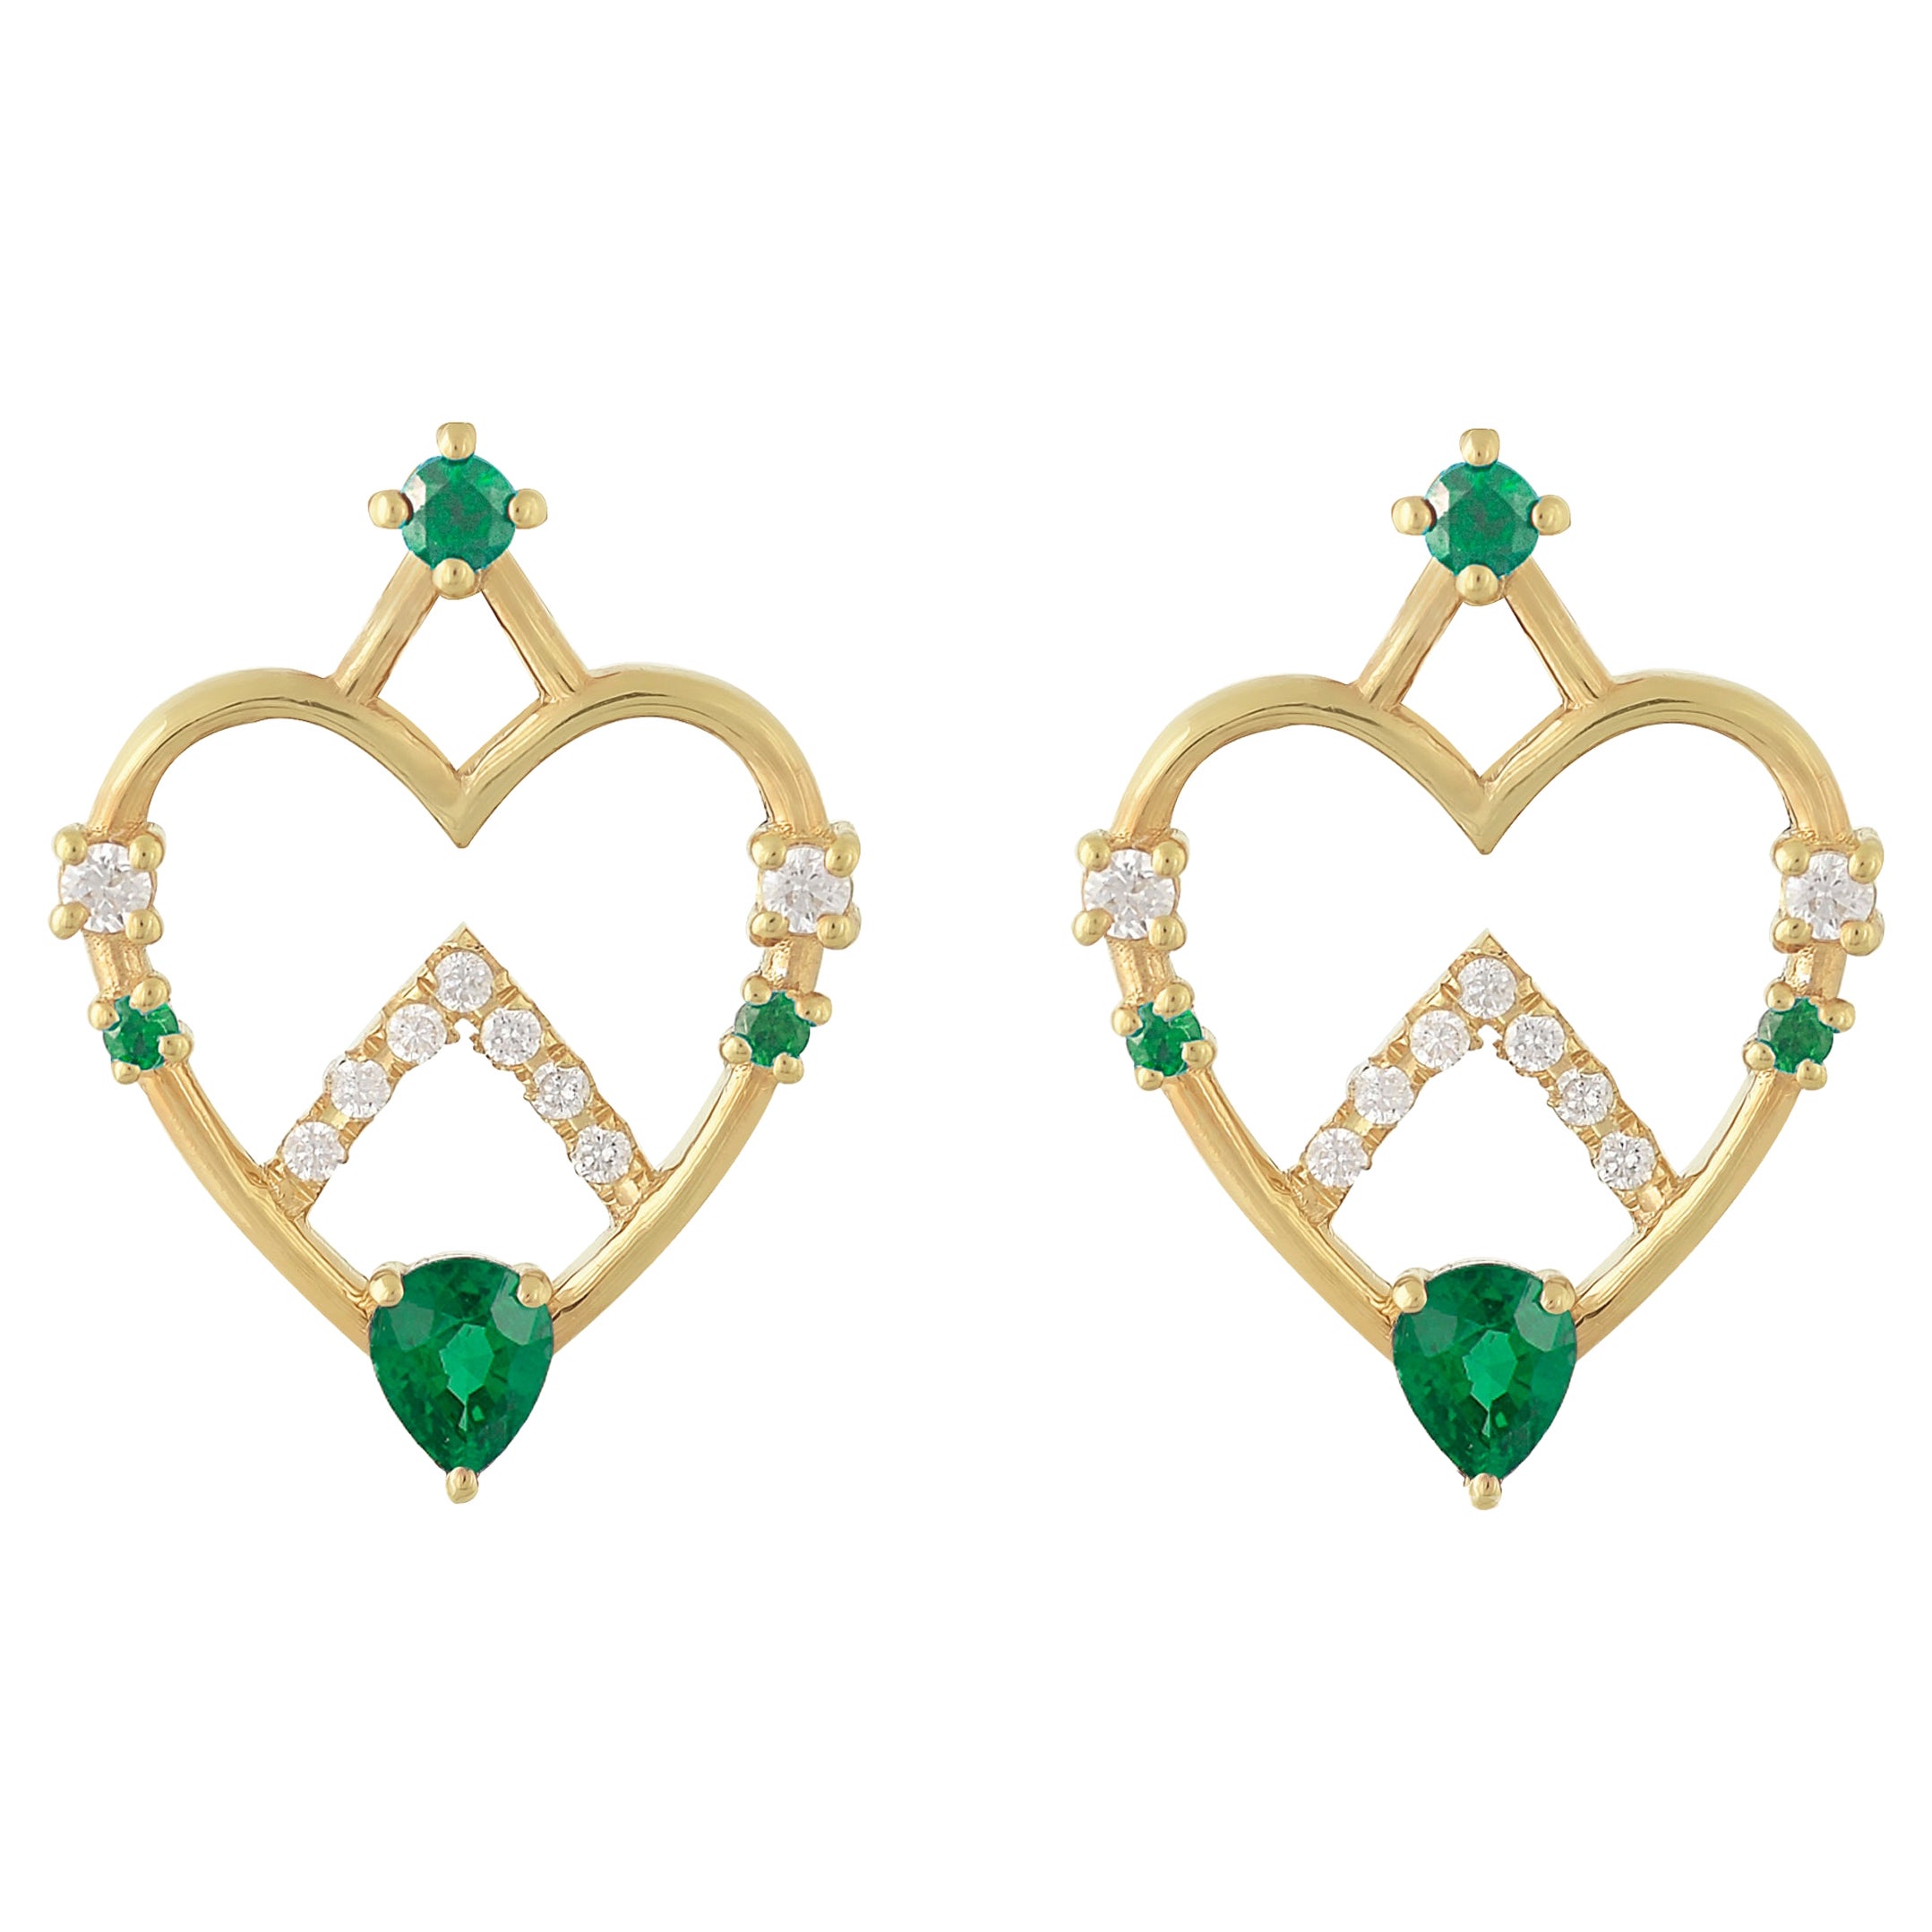 Emerald and Diamond Heart Shaped Stud Earrings in 18 Karat Gold